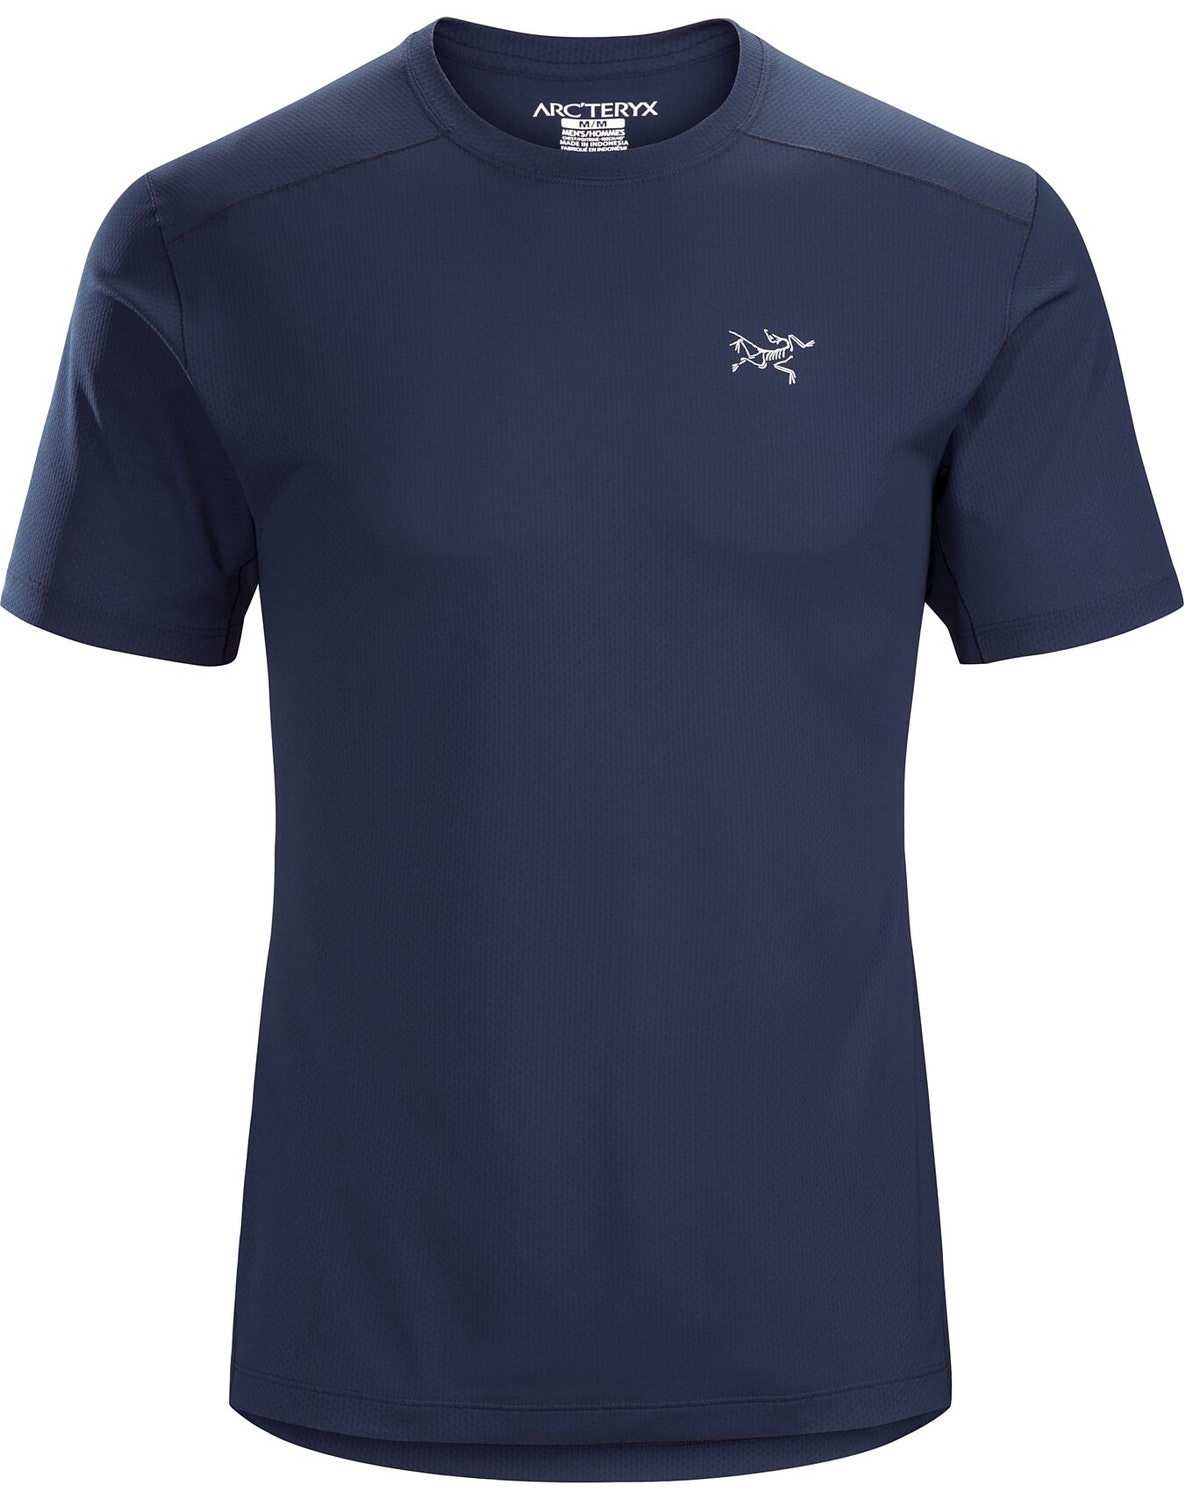 T-shirt Arc'teryx Velox Crew Uomo Blu - IT-67533655